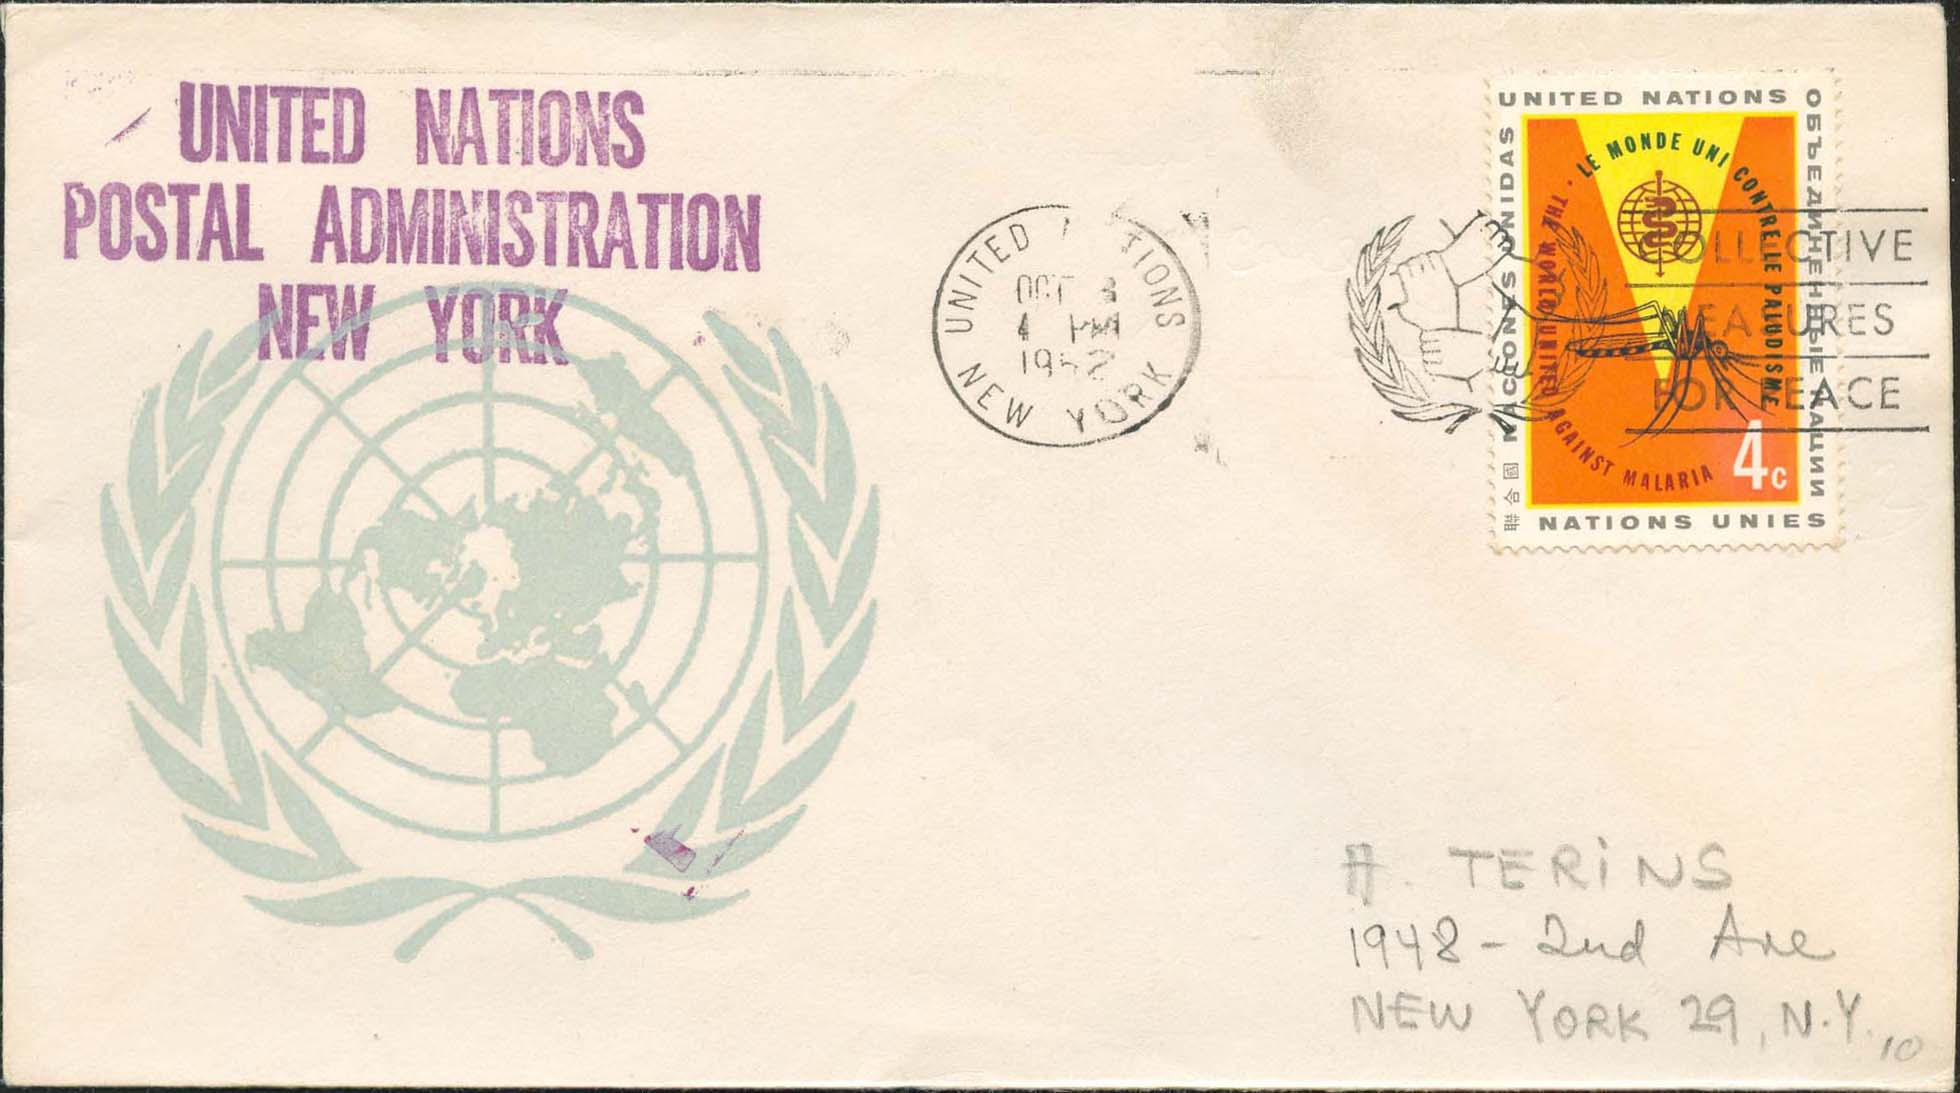 Scott 102 1st print - Oct 3, 1962 Machine slogan cancel Collective Measures for Peace UN Postal Administration rubber stamped return address